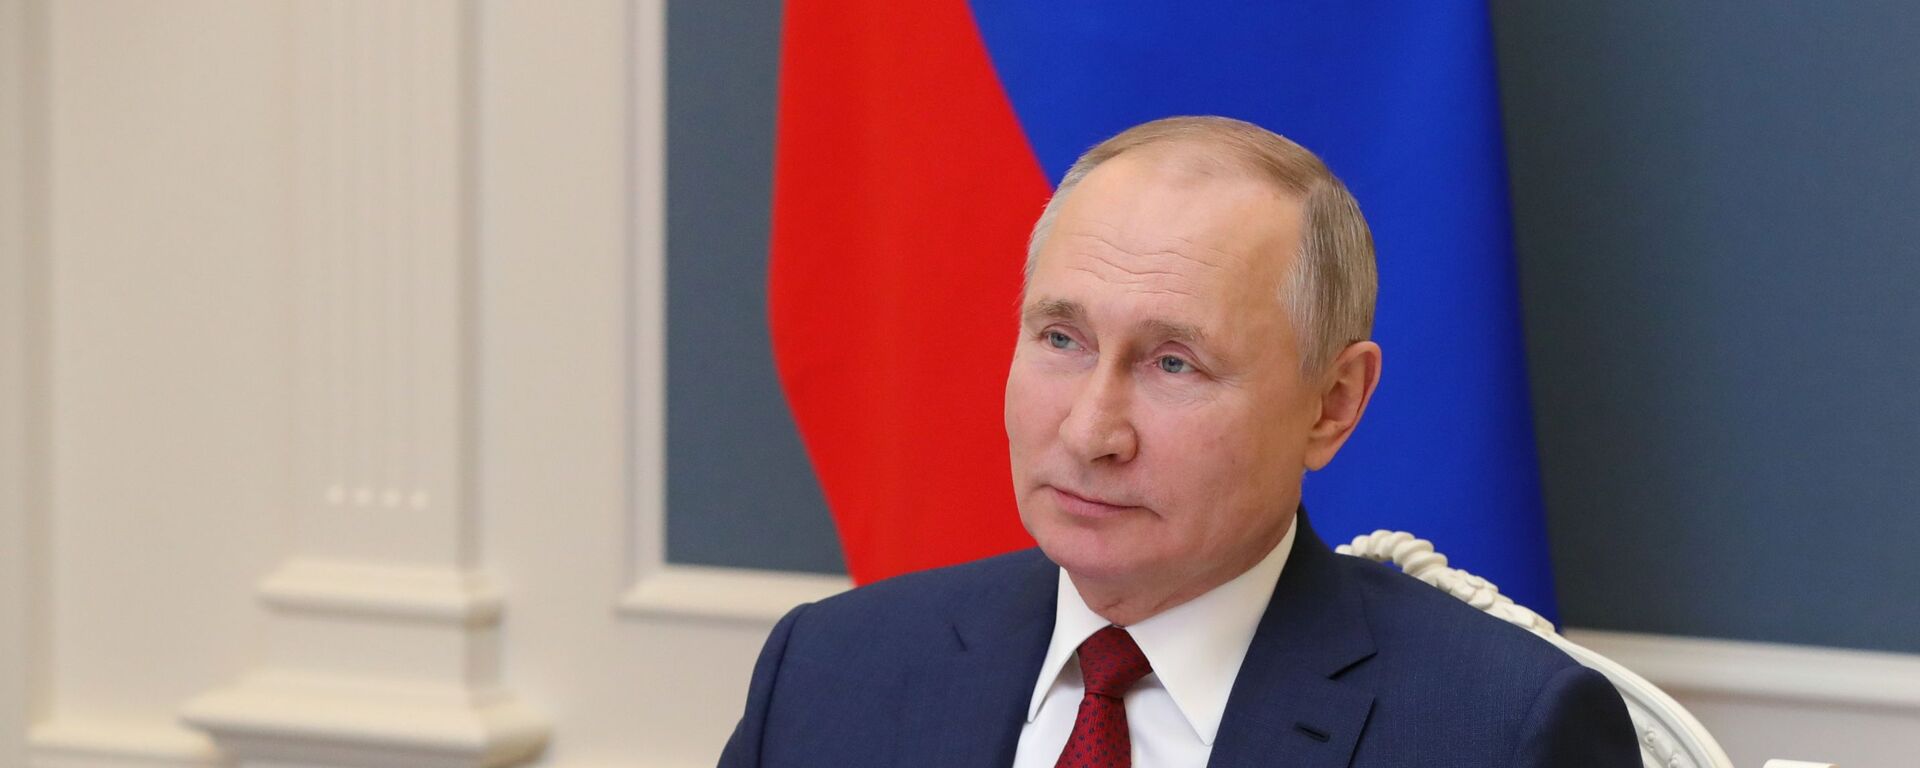 Президент РФ В. Путин выступил на сессии онлайн-форума Давосская повестка дня 2021 - Sputnik Таджикистан, 1920, 13.05.2021